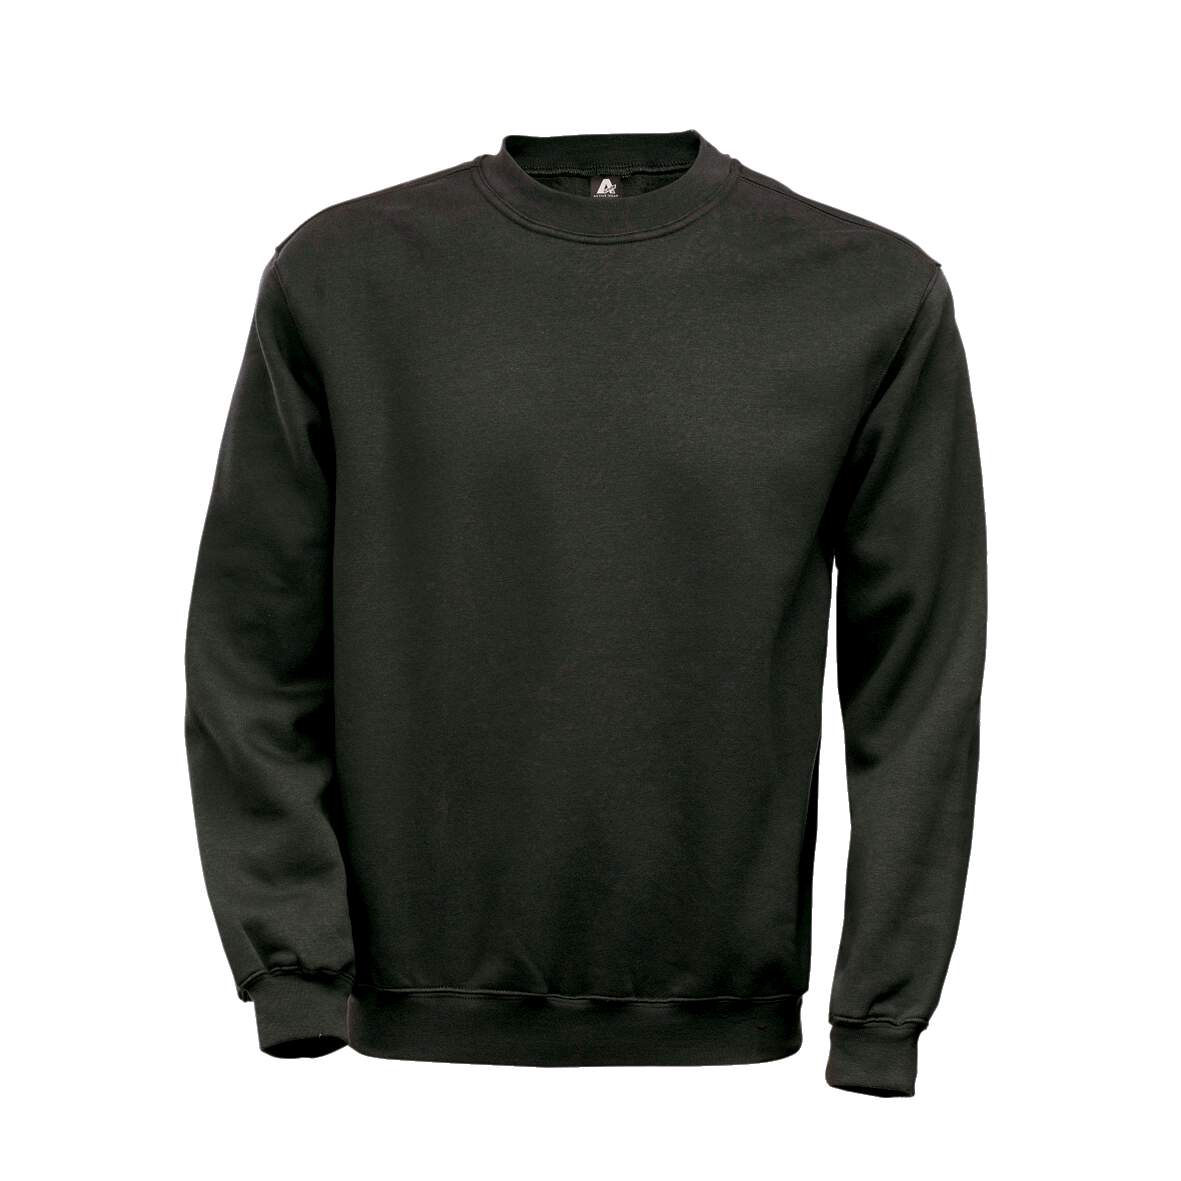 1181290 - Sweatshirt schwarz 100225